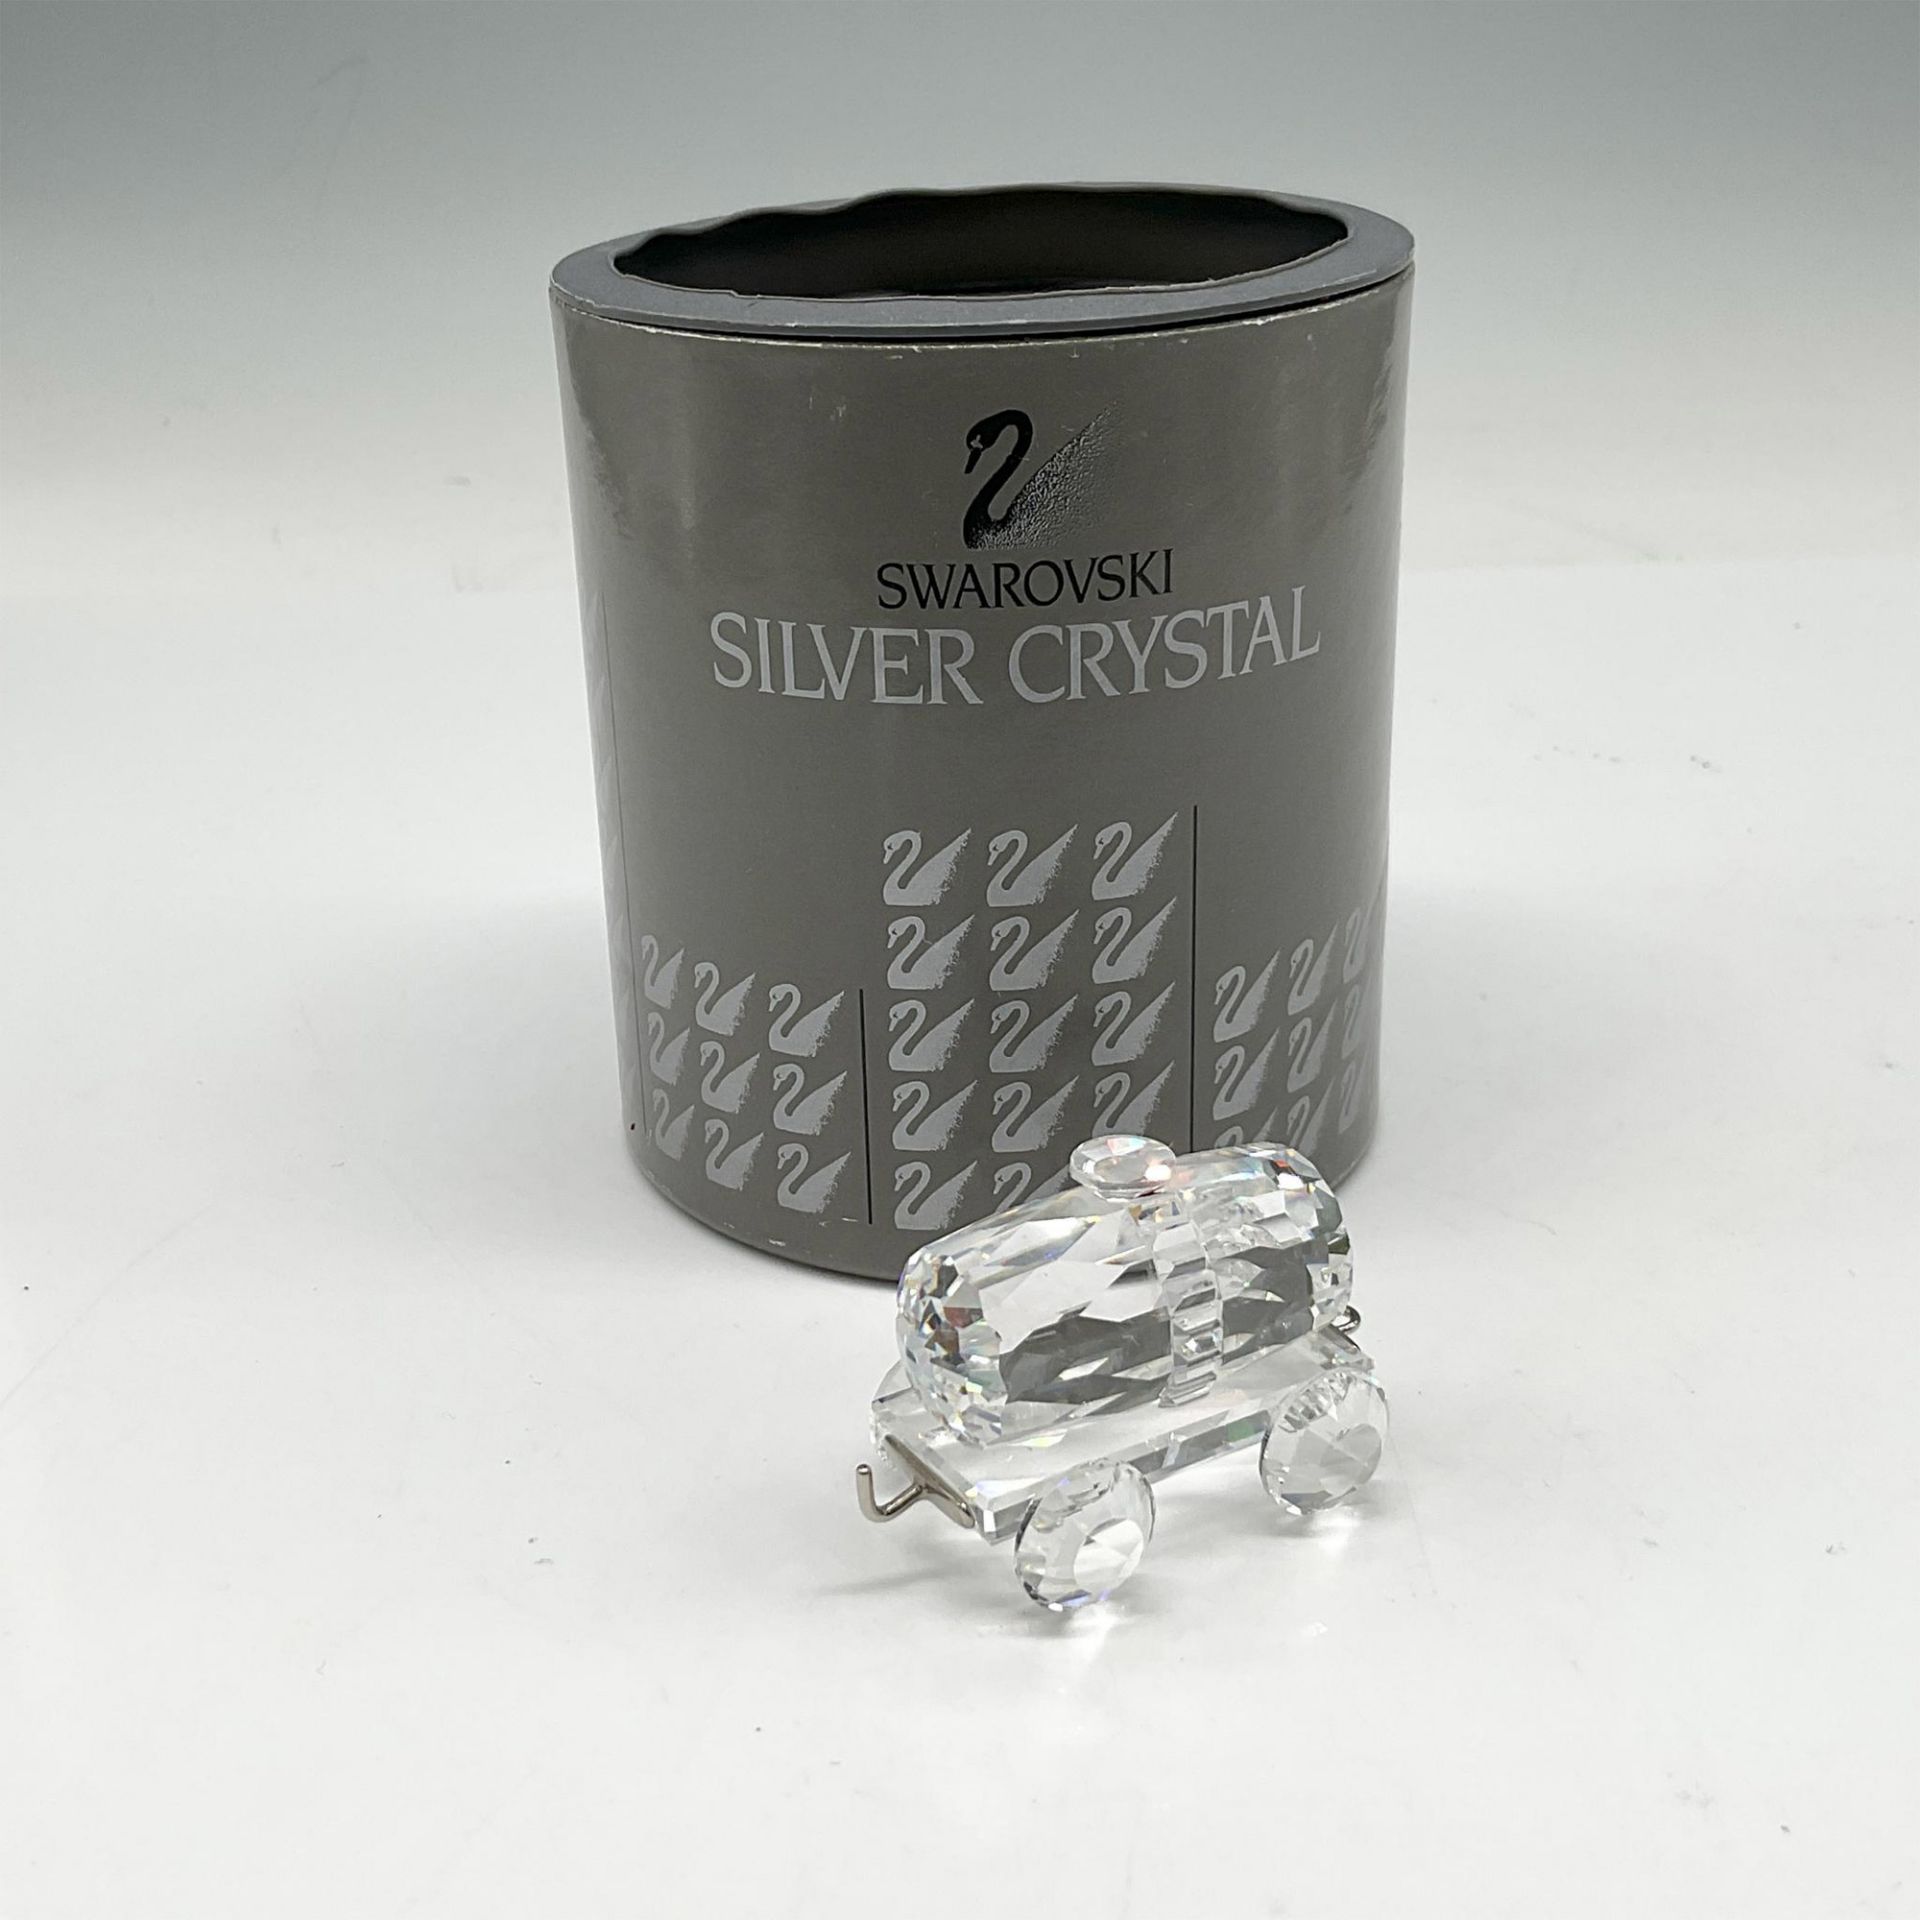 Swarovski Silver Crystal Figurine, Tank Wagon - Image 4 of 4